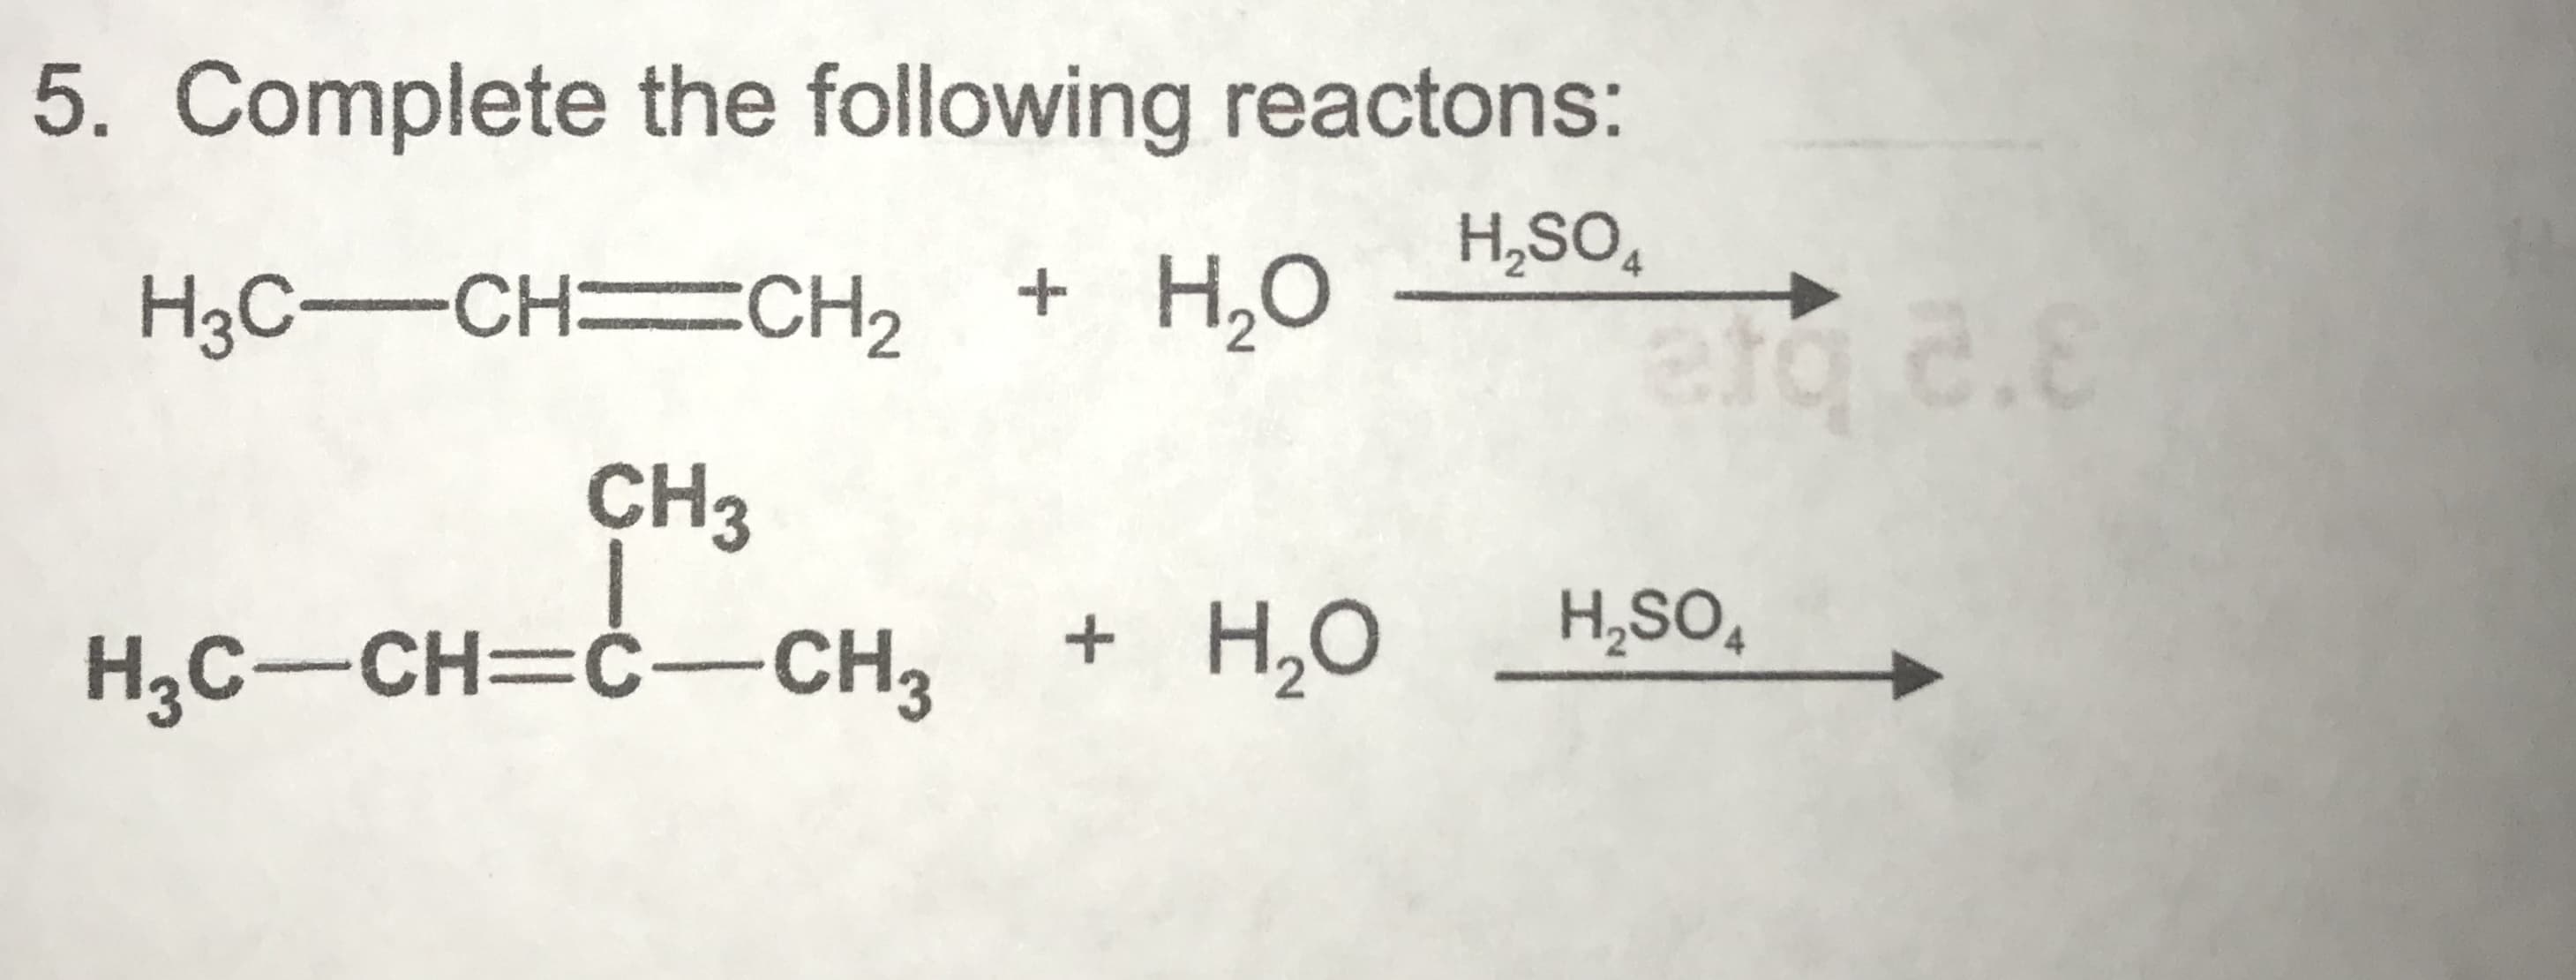 5. Complete the following reactons:
H,SO,
H3C-CH CH2
+ H,O
CH3
H3C-CH=Ċ -CH2
+ H,O
H,SO,
